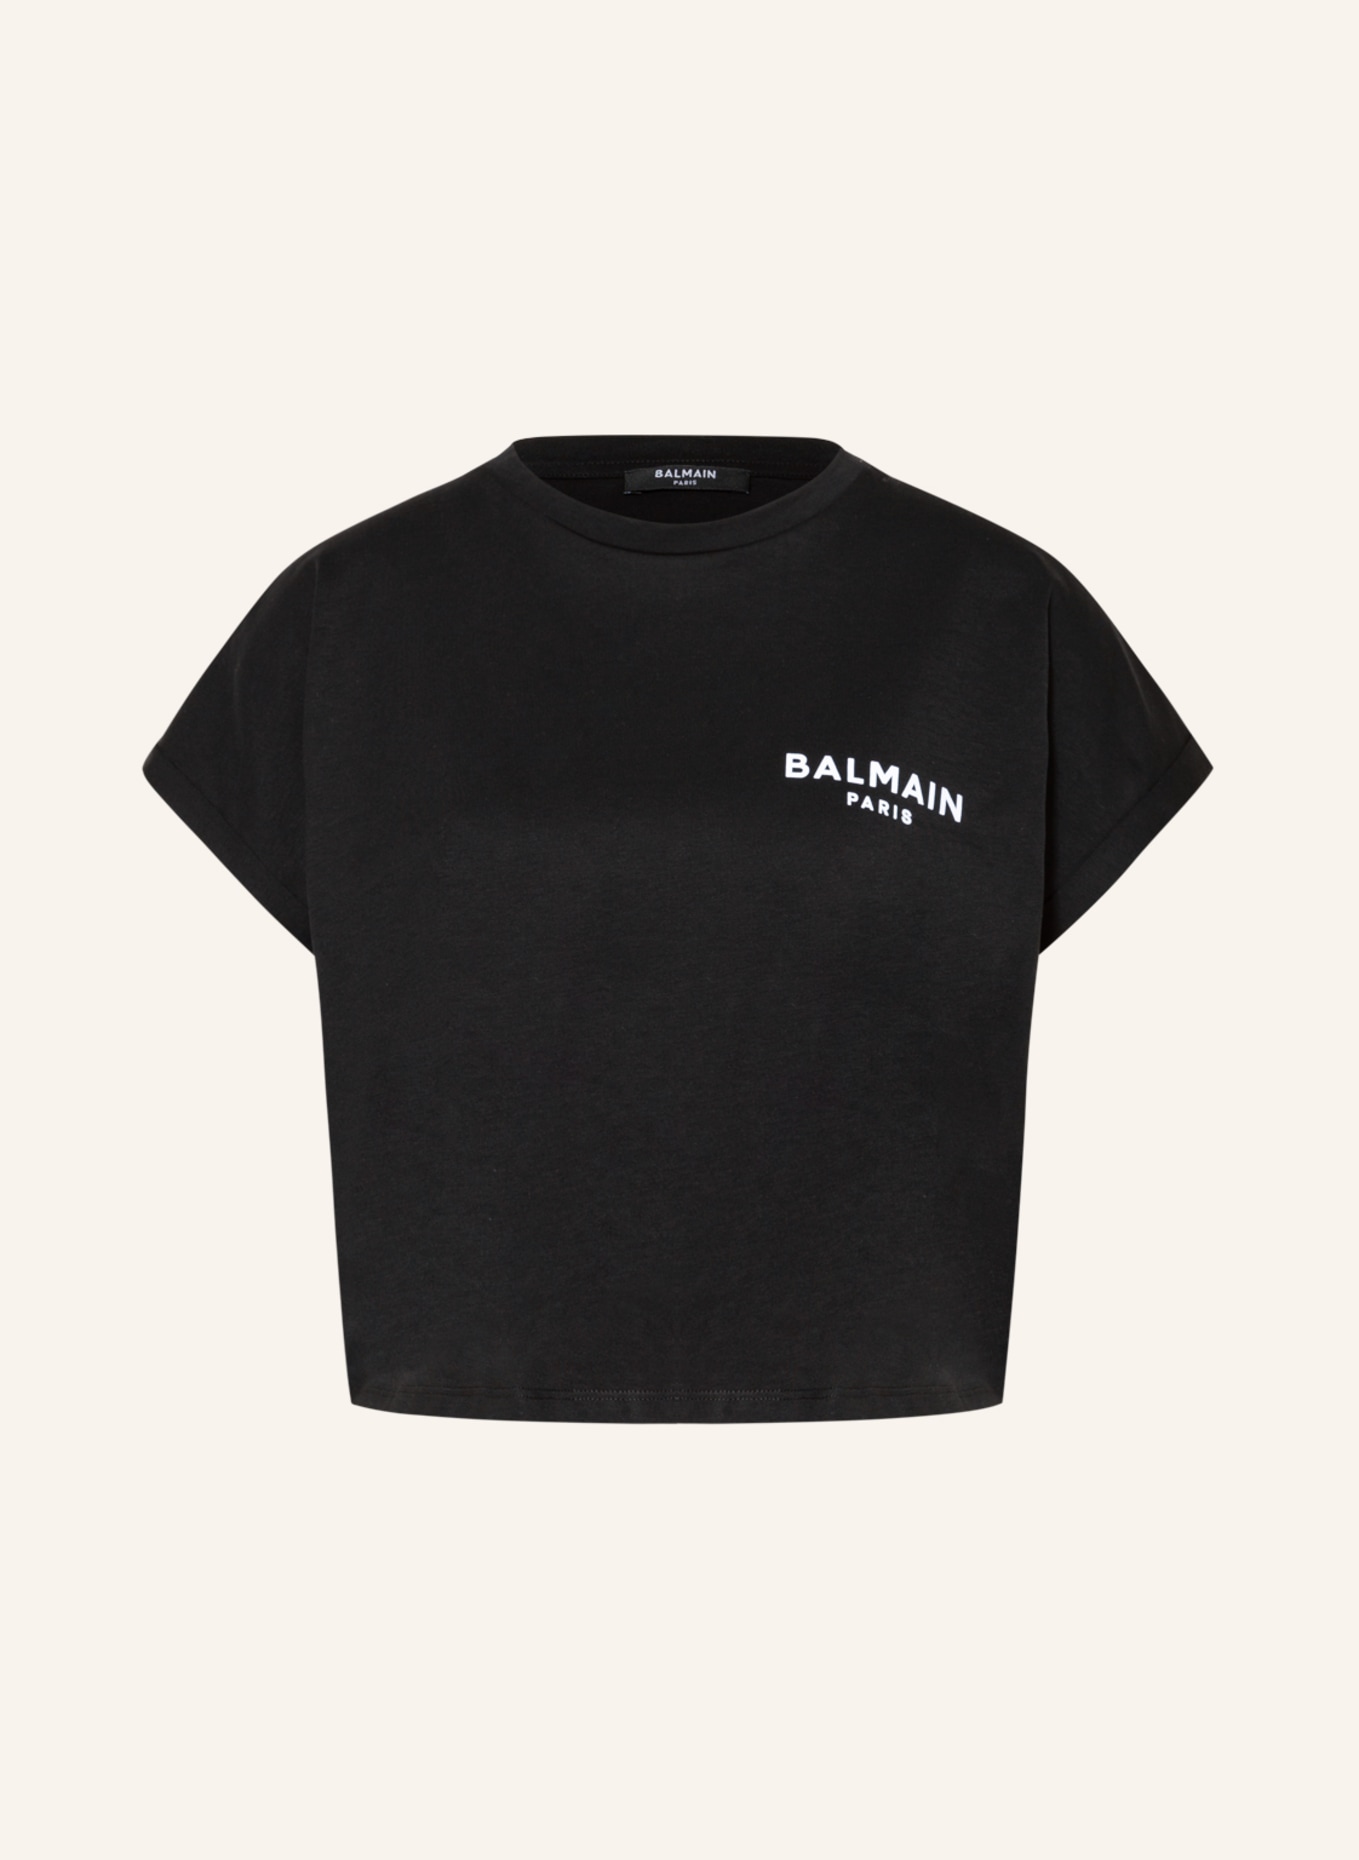 BALMAIN Cropped-Shirt, Farbe: SCHWARZ (Bild 1)